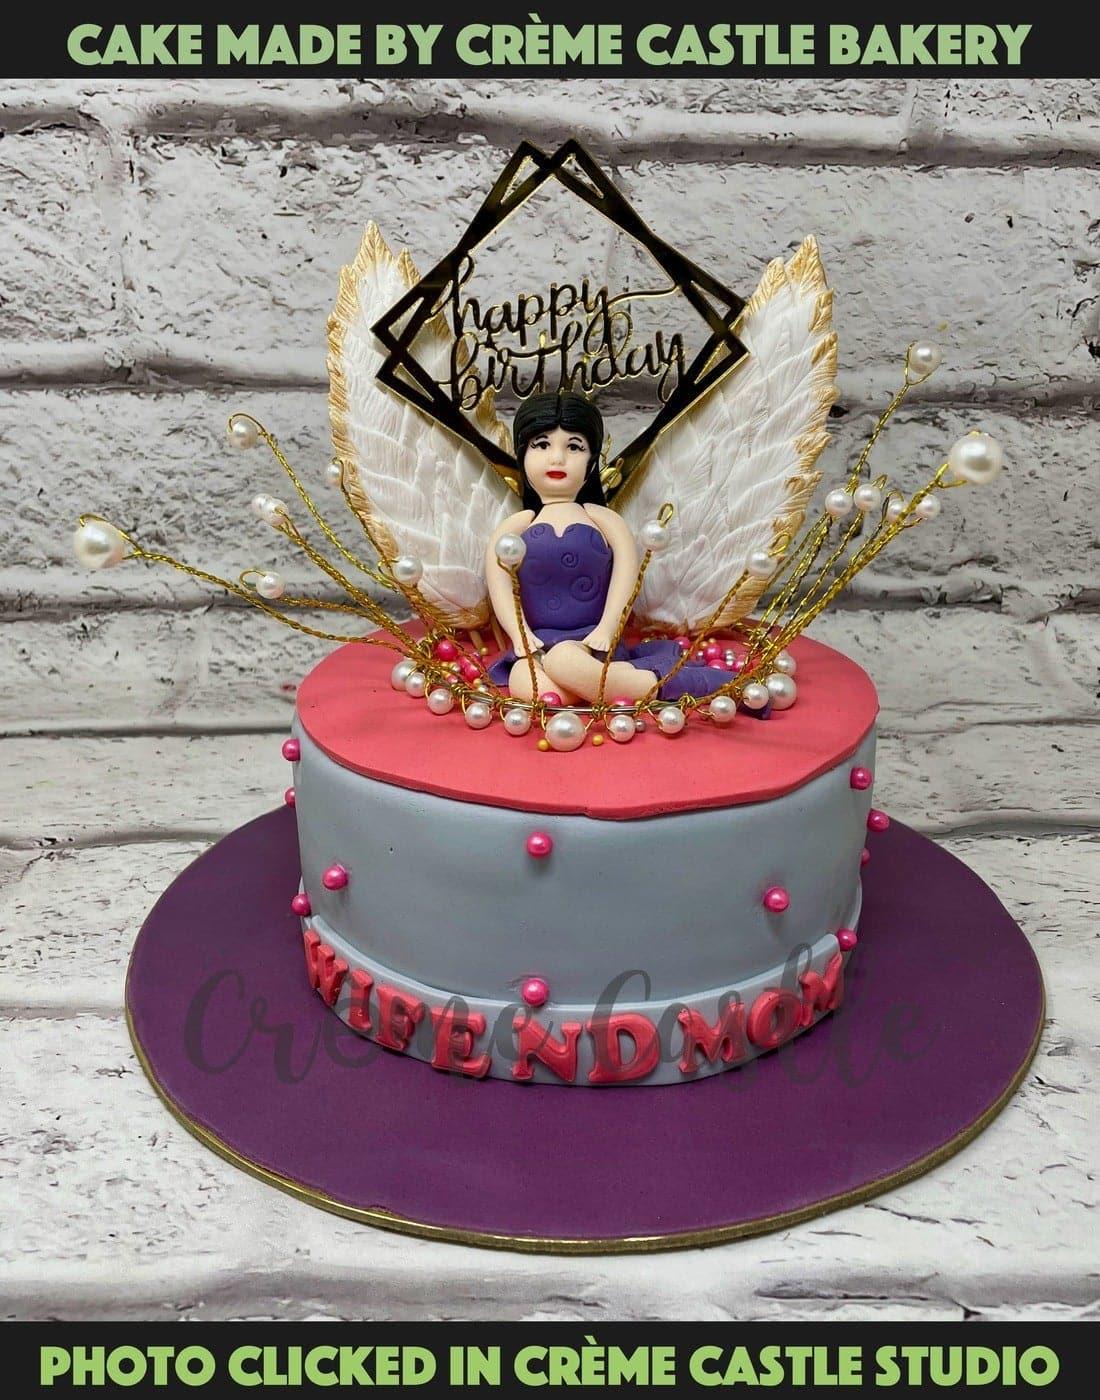 Angel Birthday Cakes | Fabulous Cakes